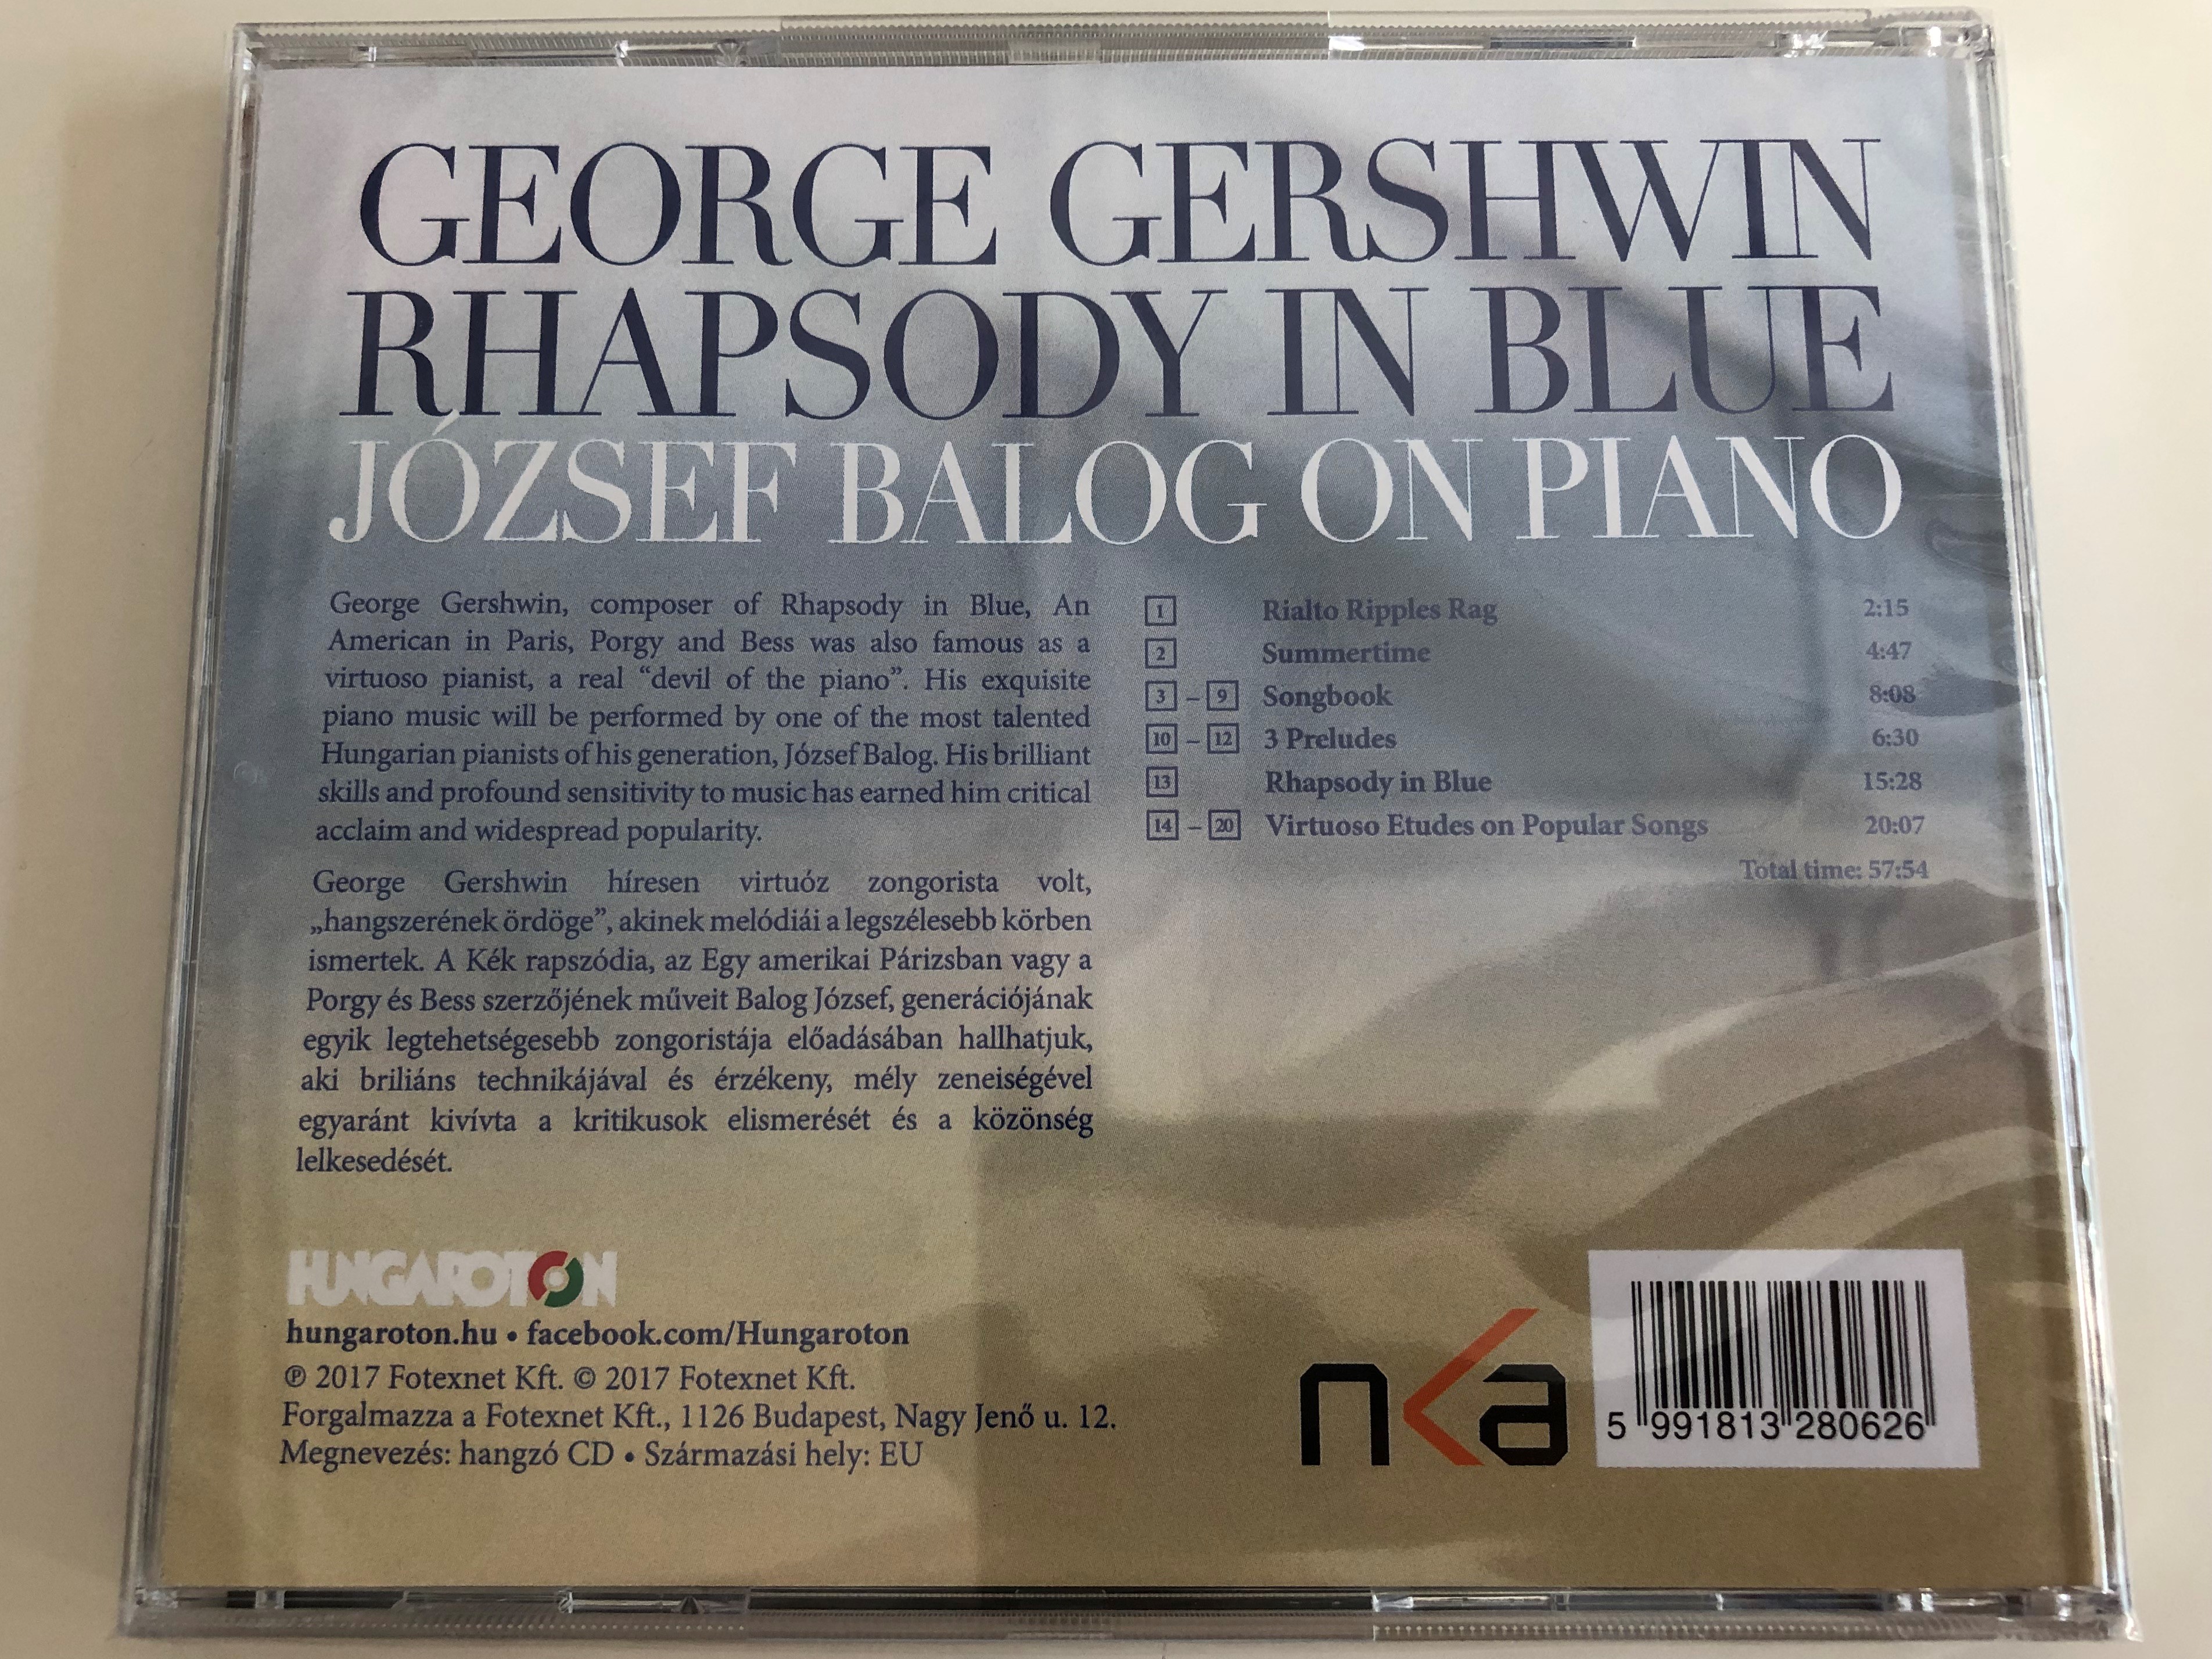 j-zsef-balog-gershwin-rhapsody-in-blue-j-zsef-balof-recipient-of-liszt-ferenc-prize-18-audio-cd-2017-hungaroton-2-.jpg